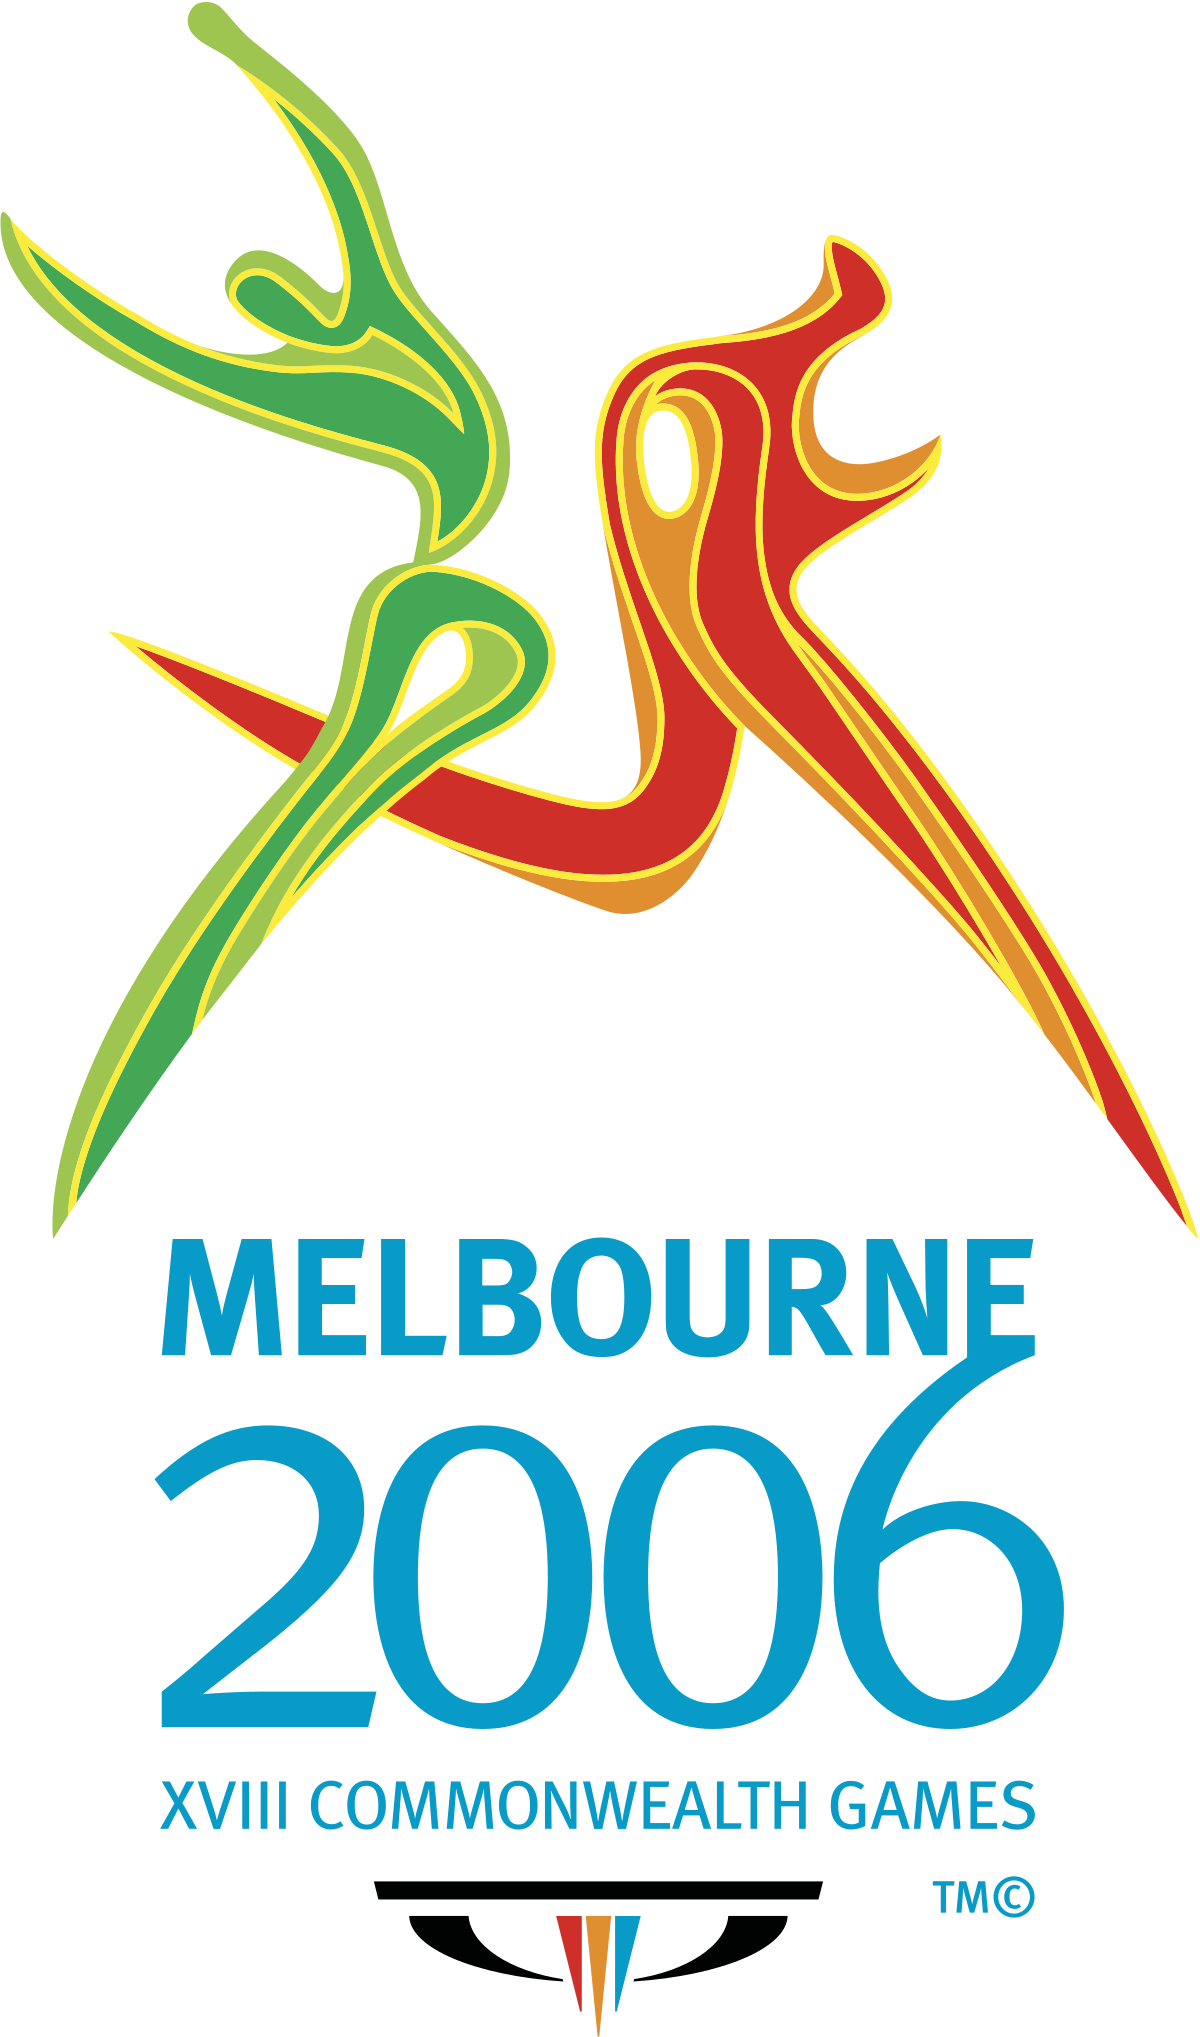 2006 Commonwealth Games - Wikipedia